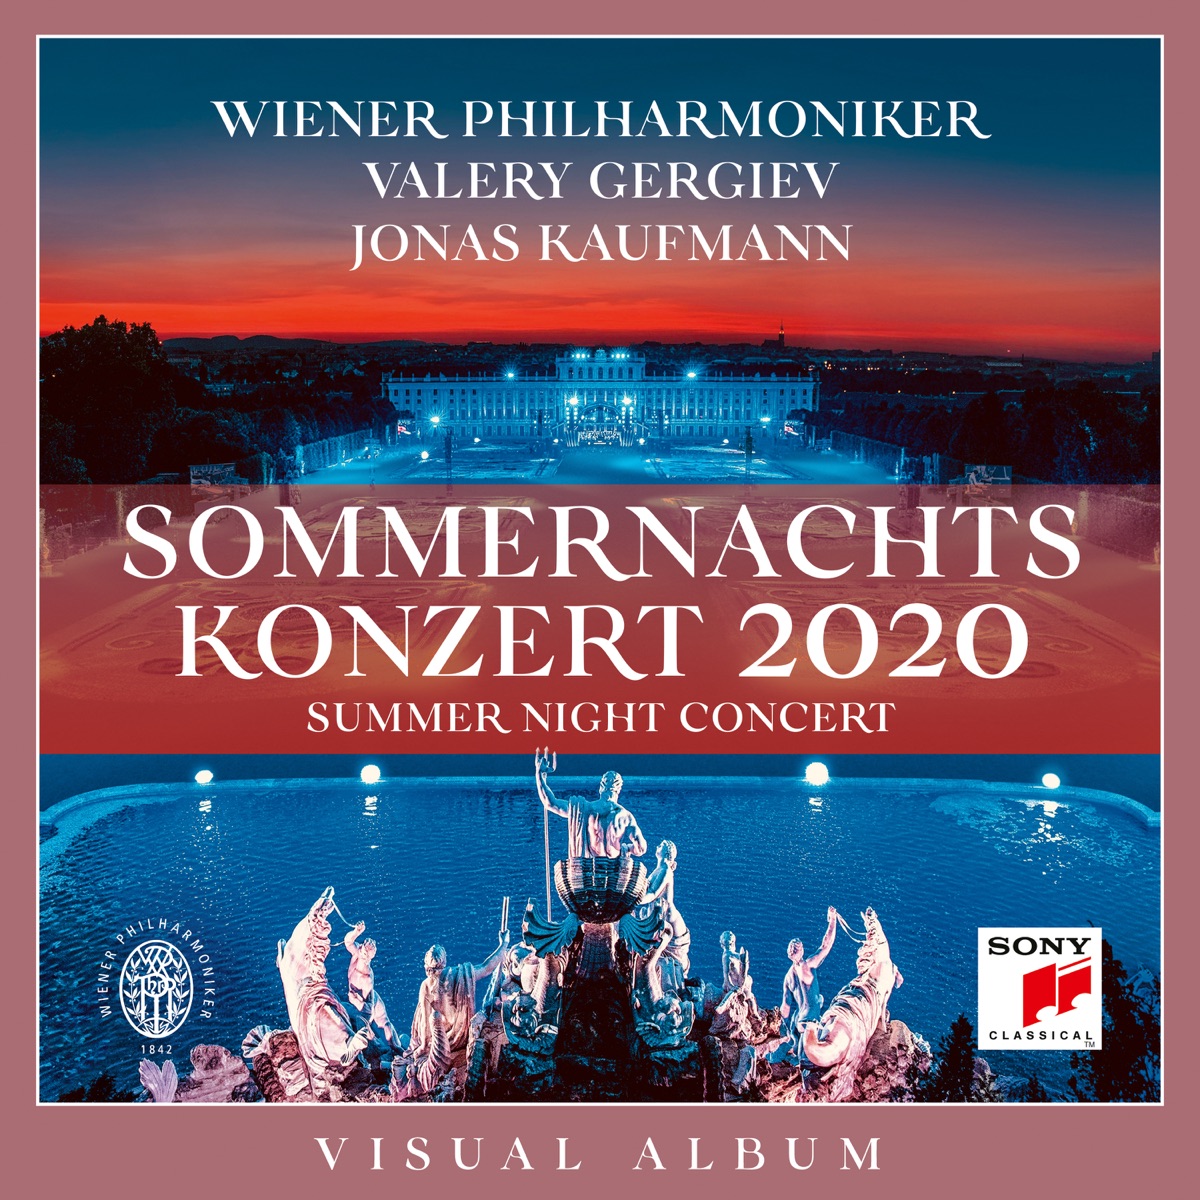 Sommernachtskonzert 2020 / Summer Night Concert 2020 by Valery Gergiev,  Vienna Philharmonic & Jonas Kaufmann on Apple Music